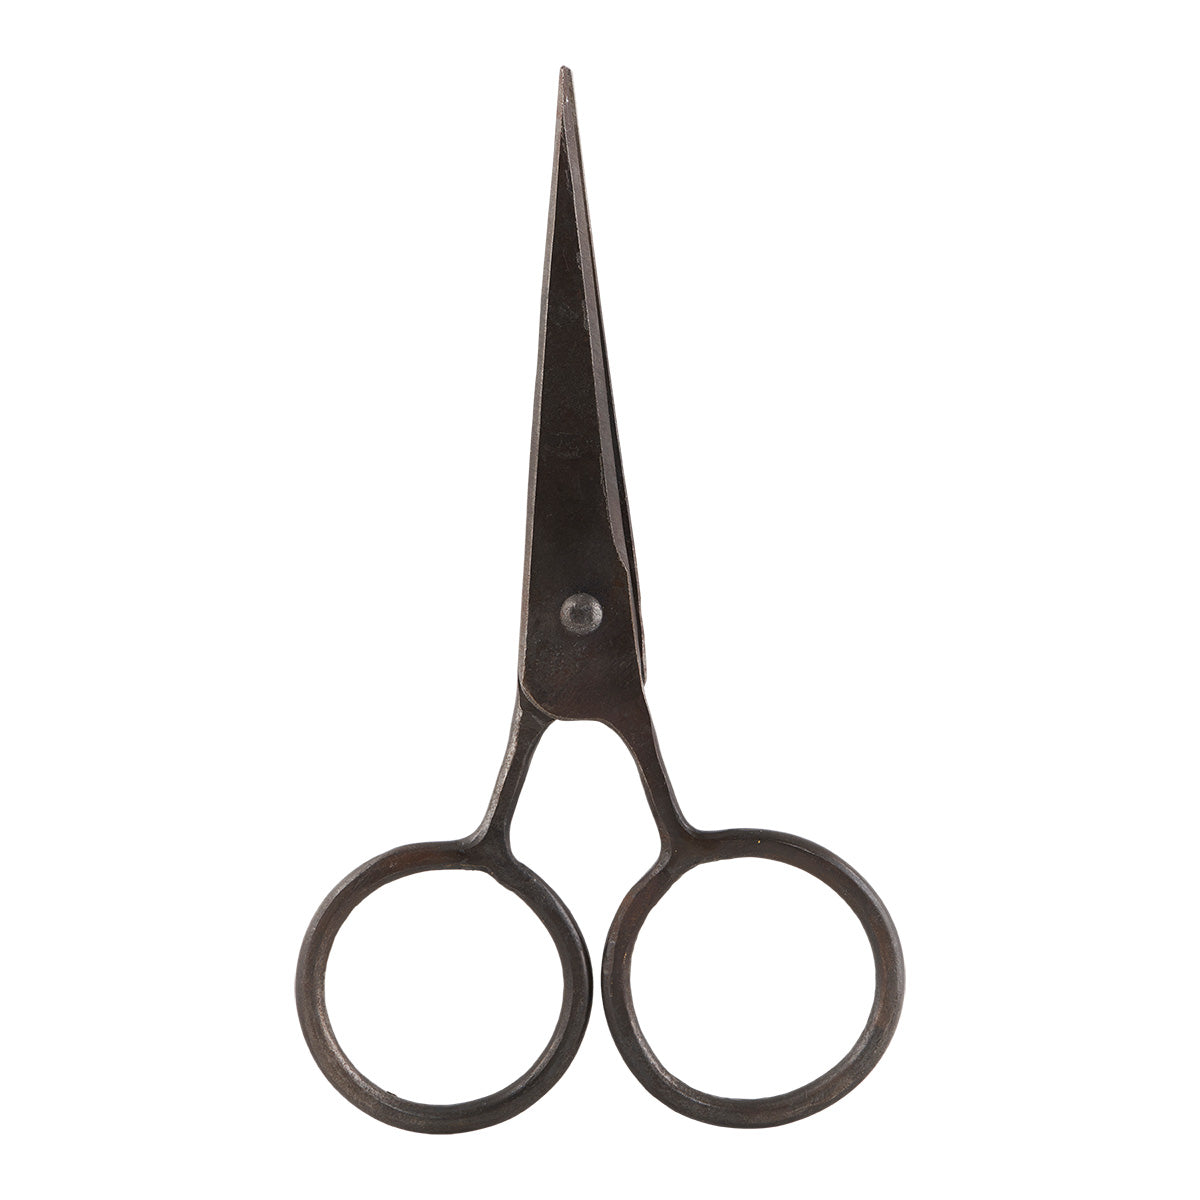 Small black scissor